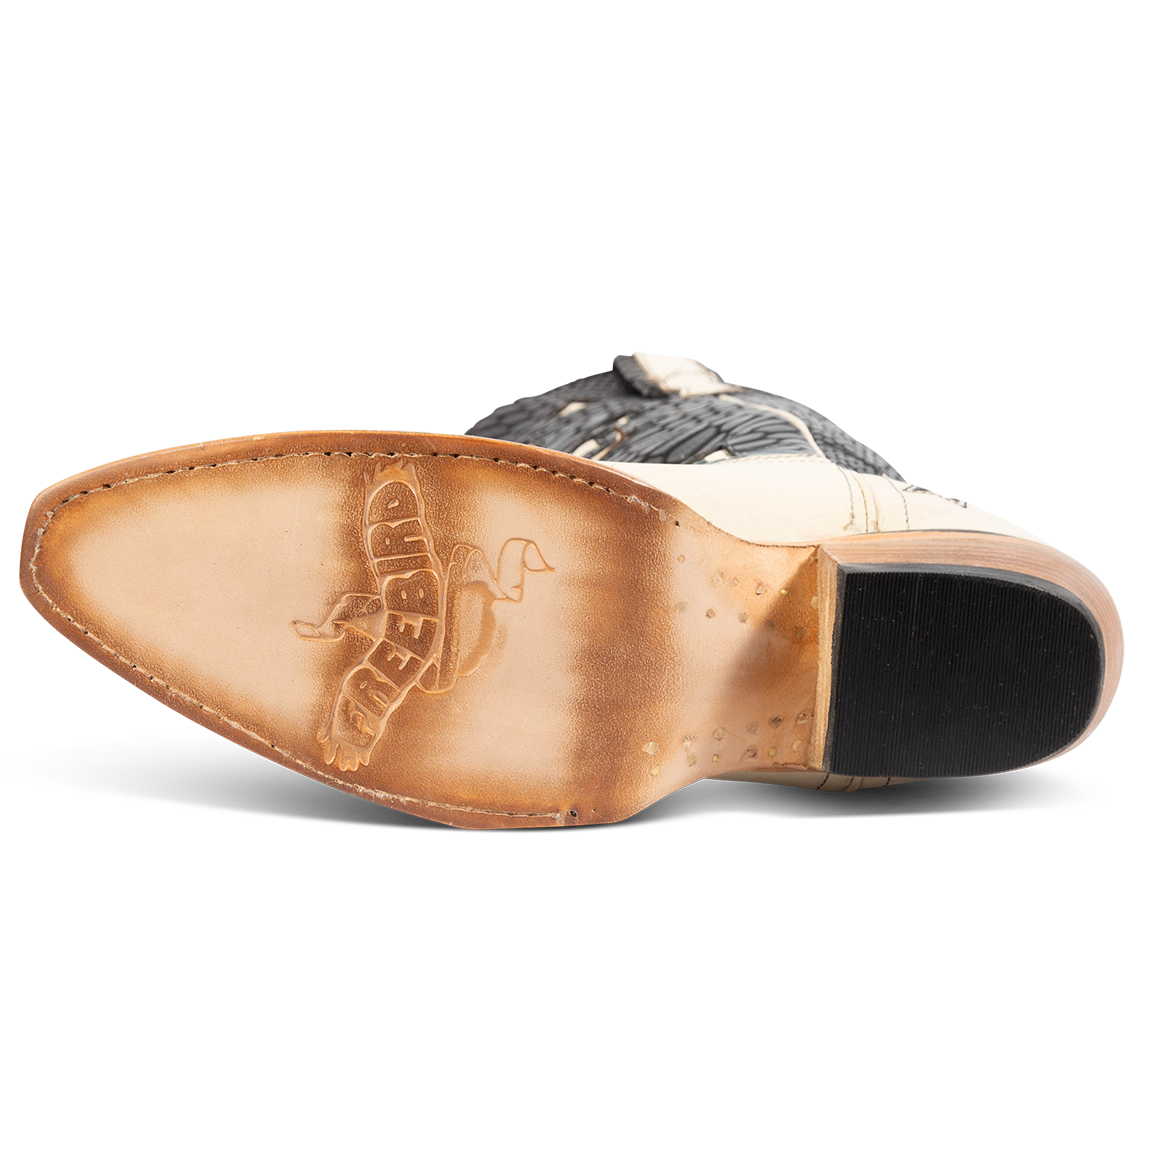 Tan leather sole imprinted with FREEBIRD on women's Starzz black western boot